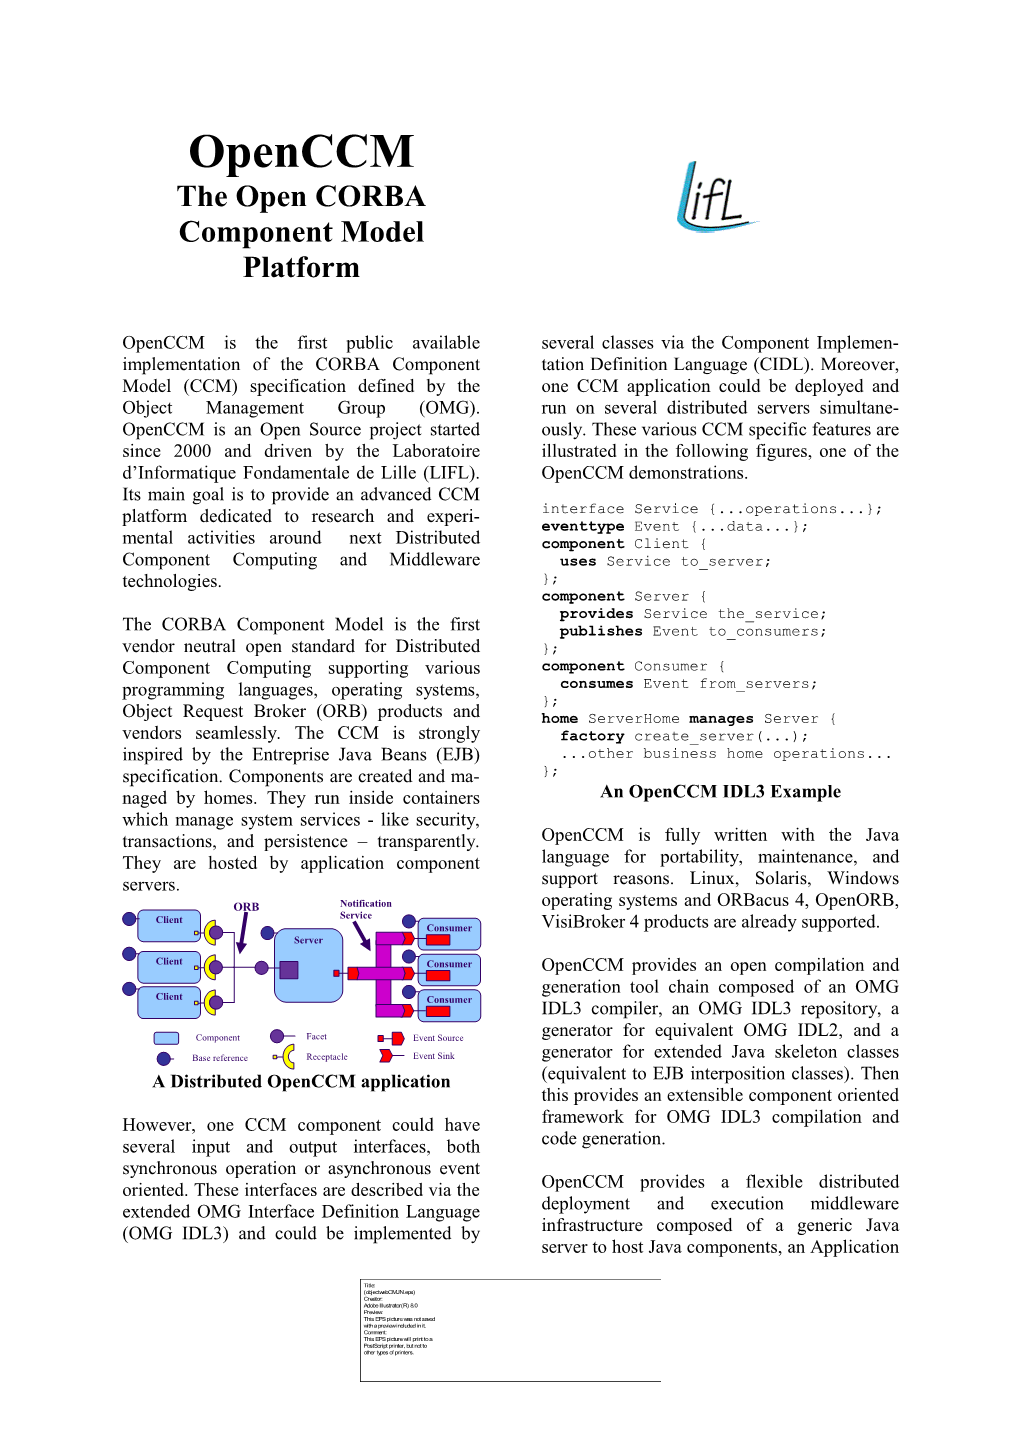 The Open CORBA Component Model Platform